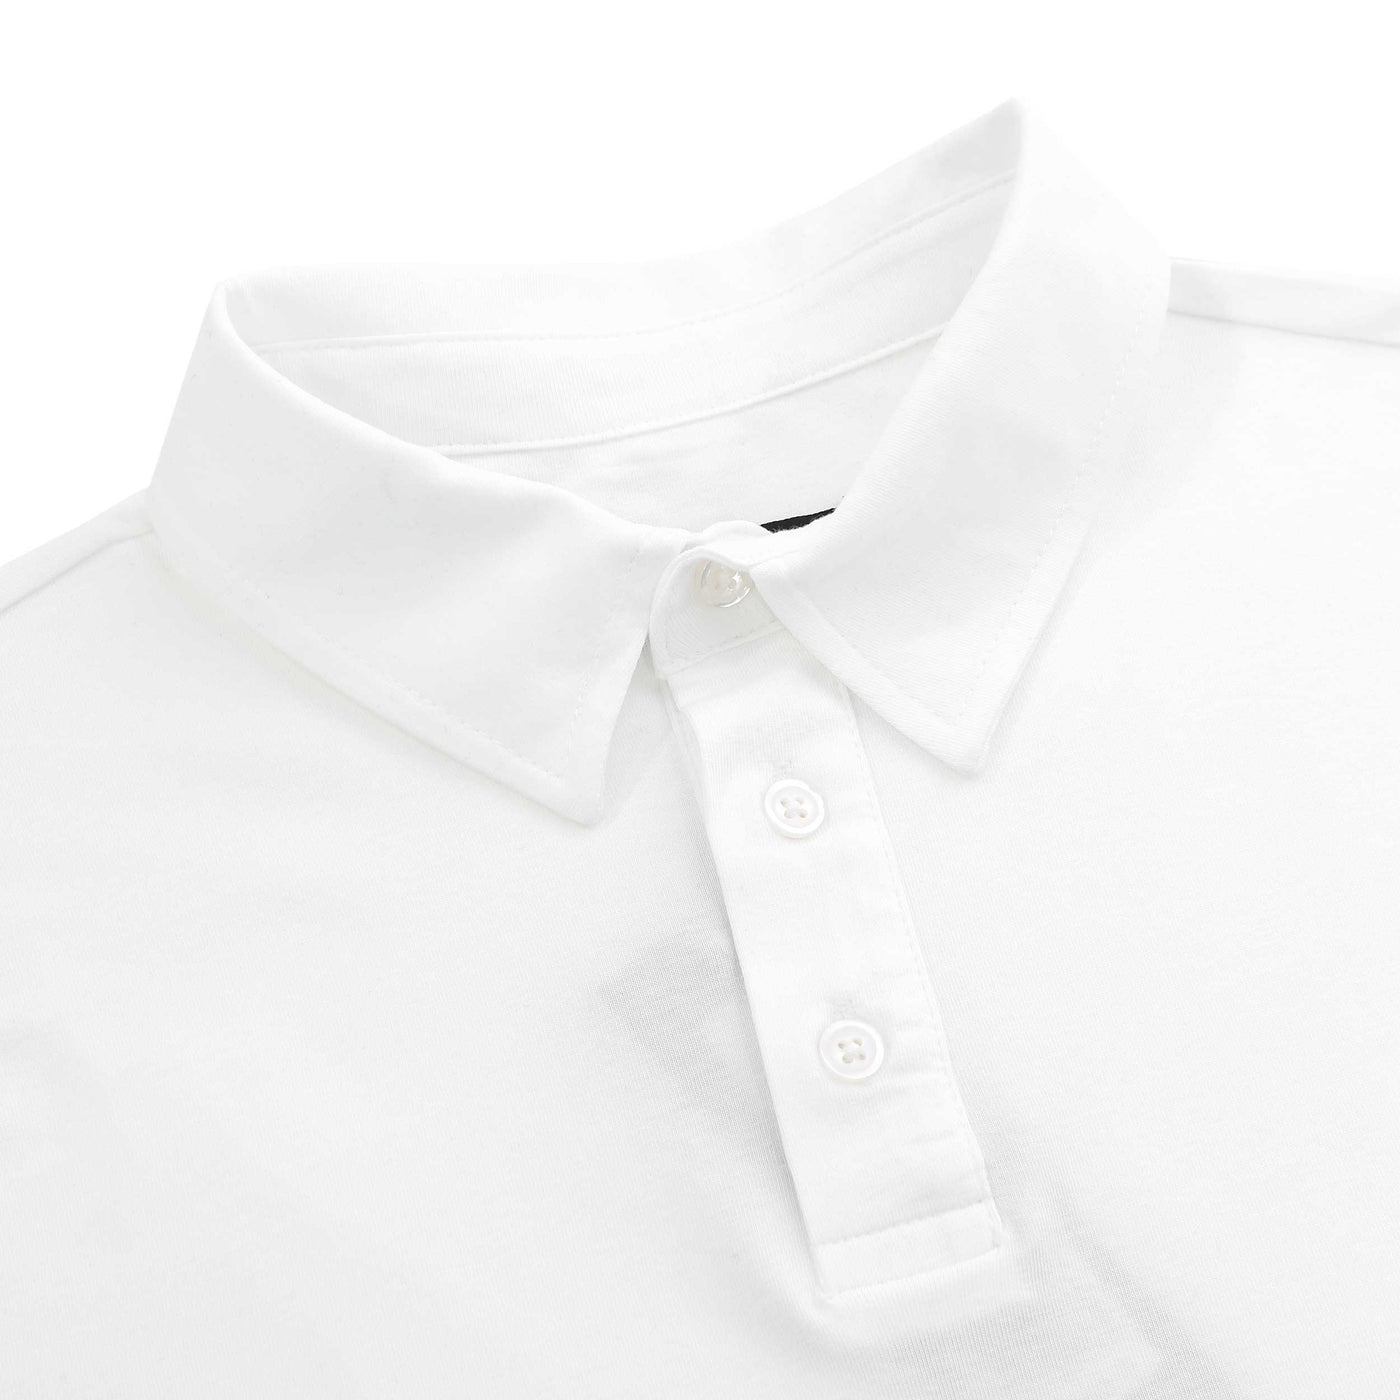 Remus Uomo Basic Tencel Cotton Polo Shirt in White Collar